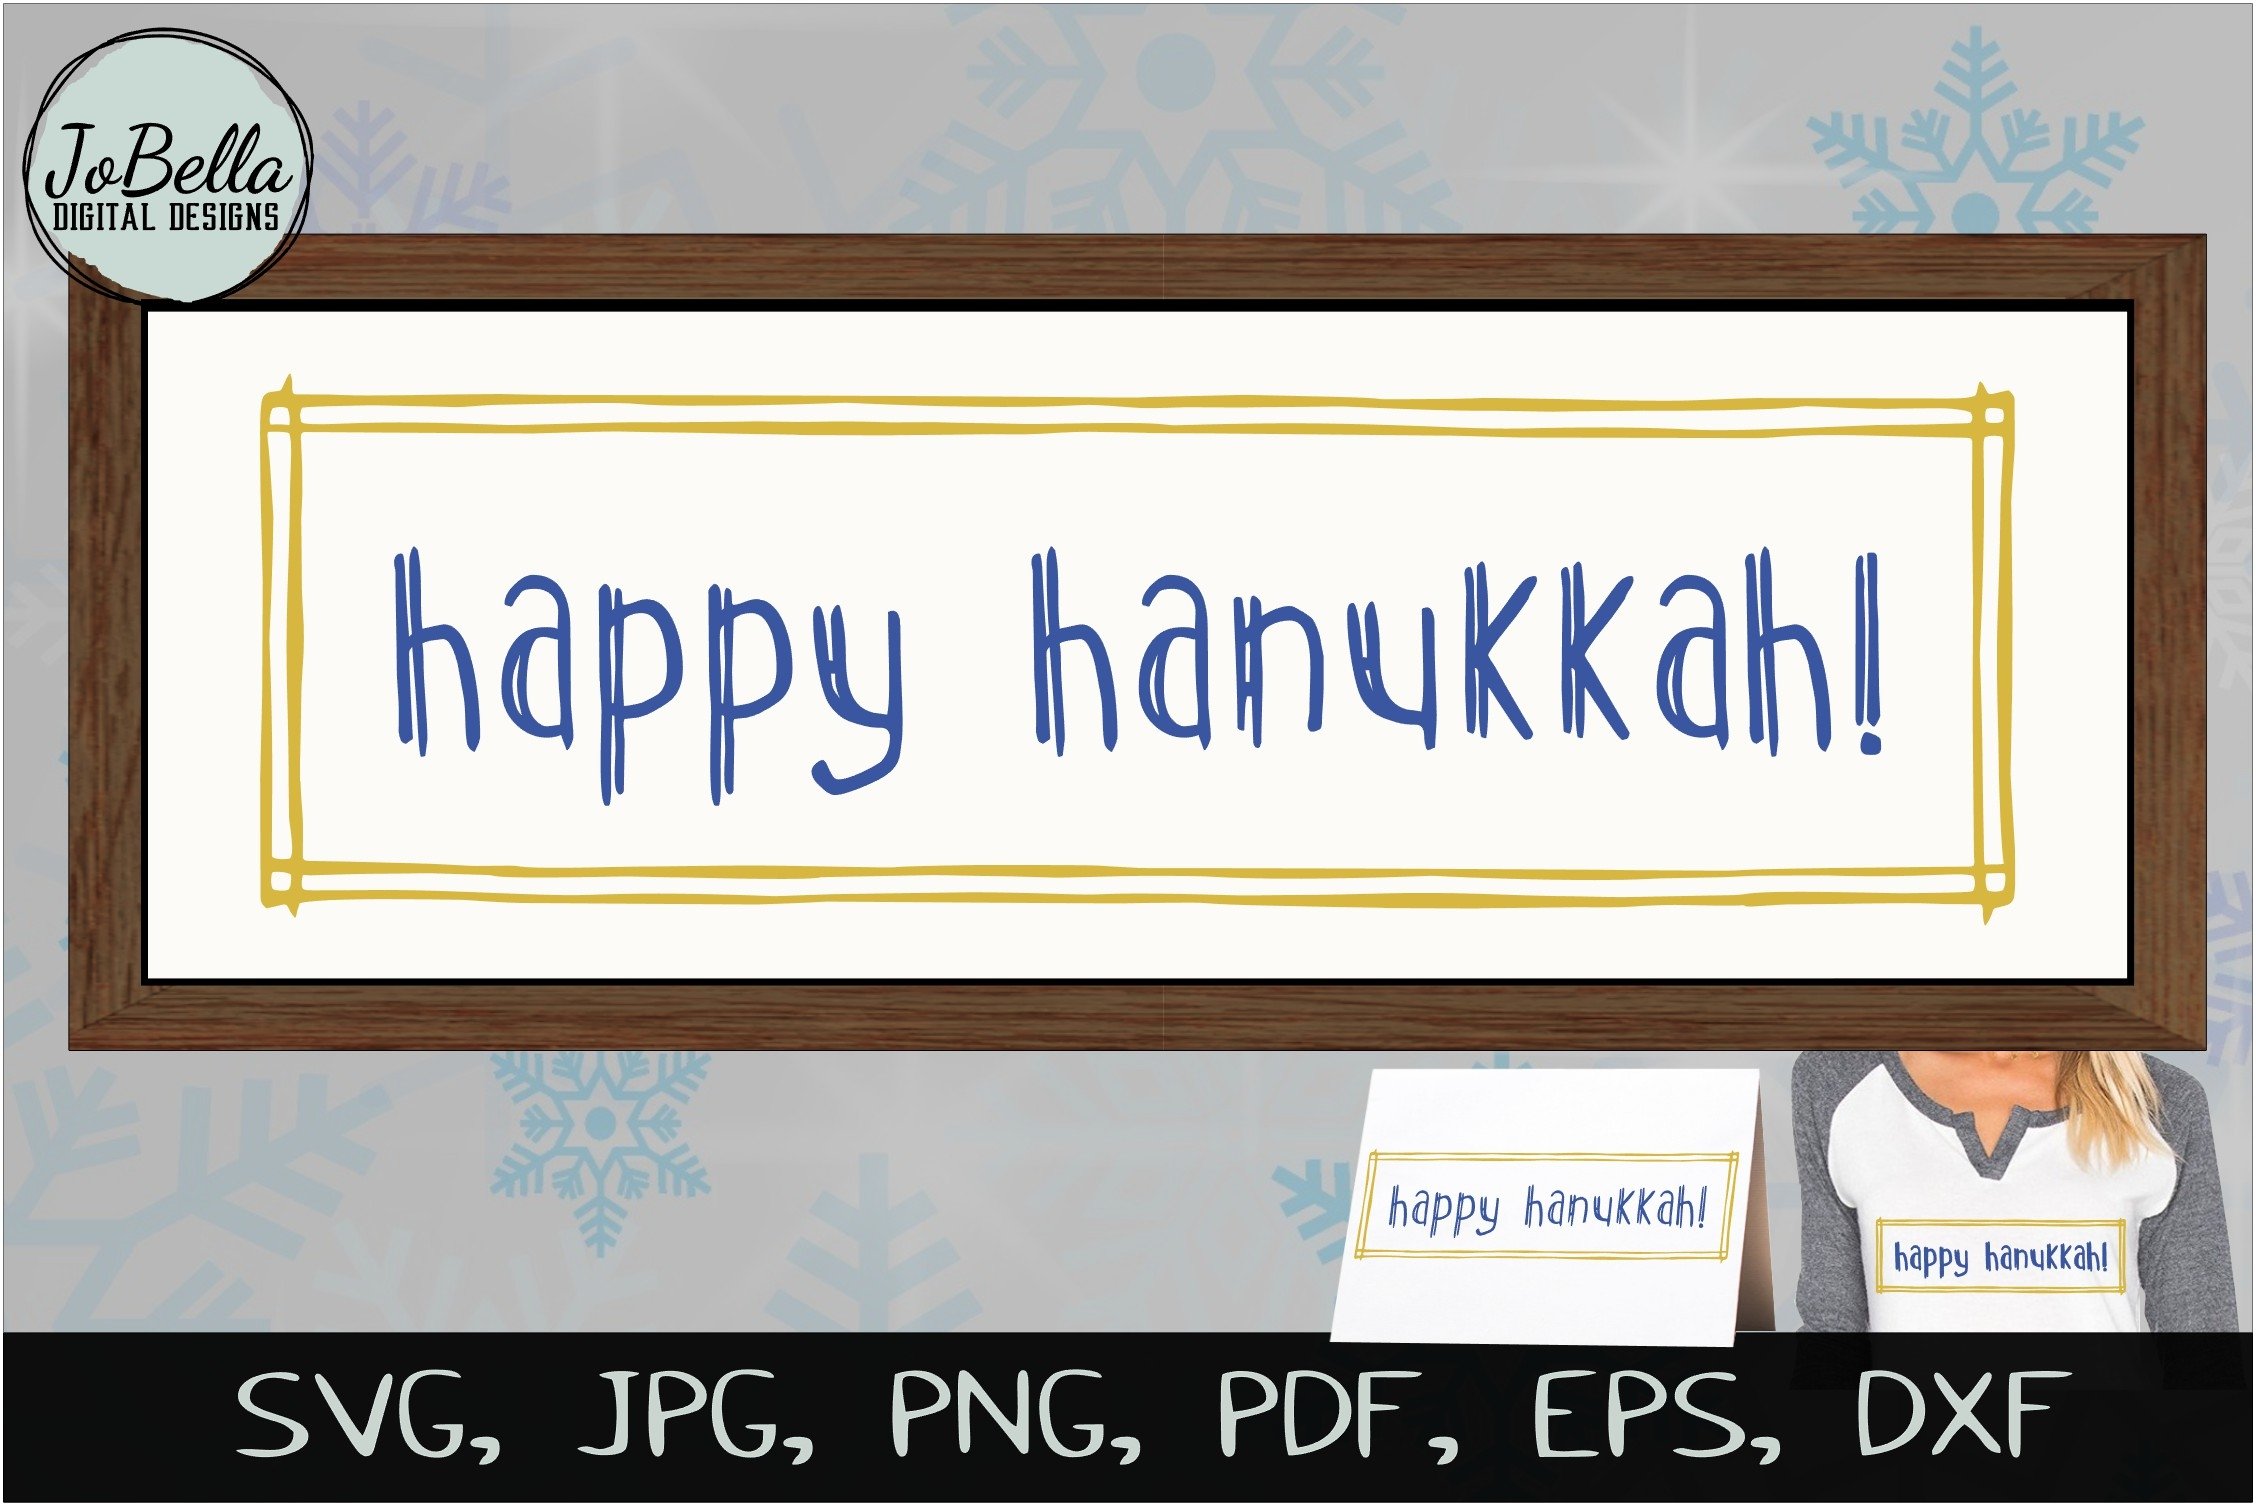 The lettering "Happy Hanukkah".